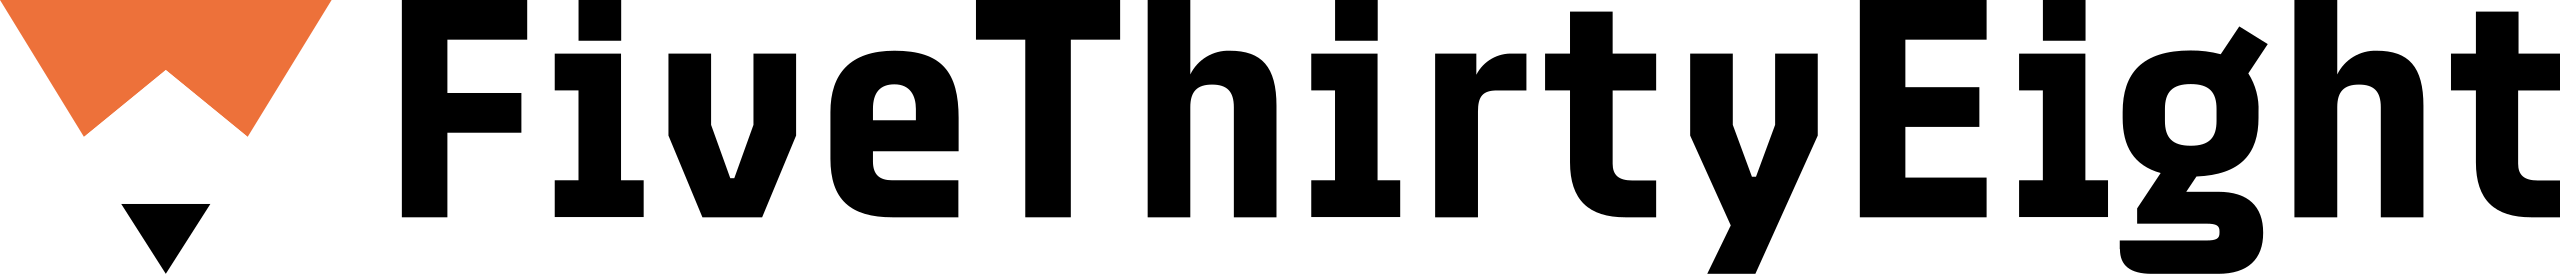 File:FiveThirtyEight Logo.svg - Wikipedia